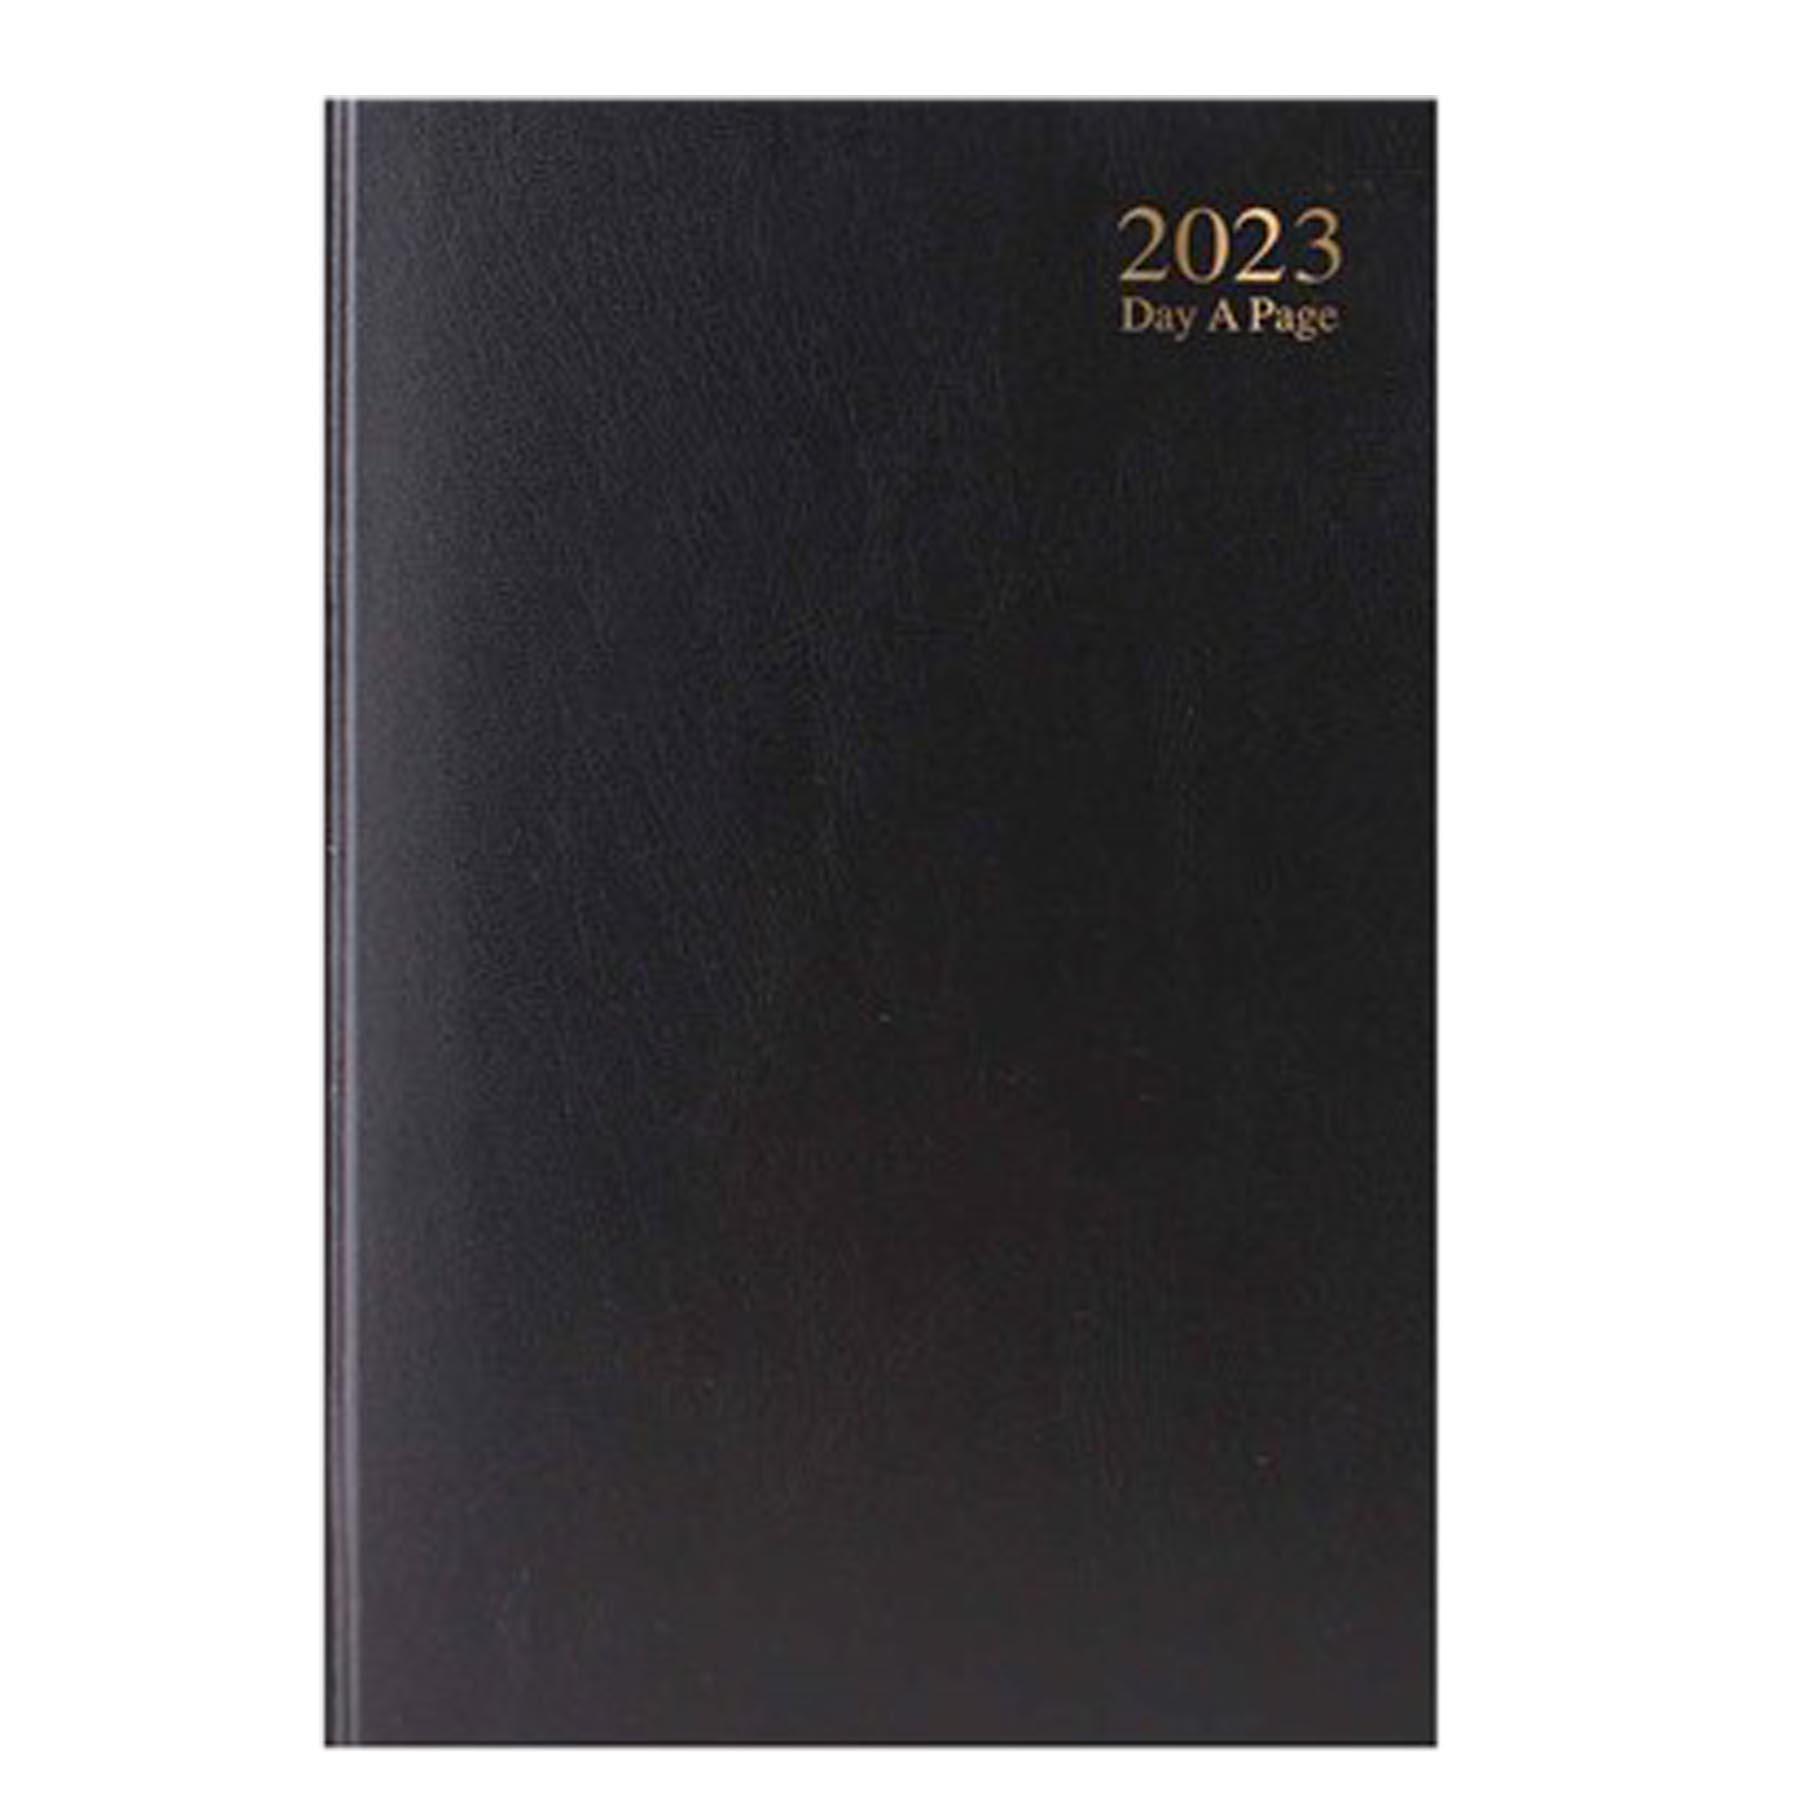 2023 A4 Hardback Day a Page Diary 3188 - Black